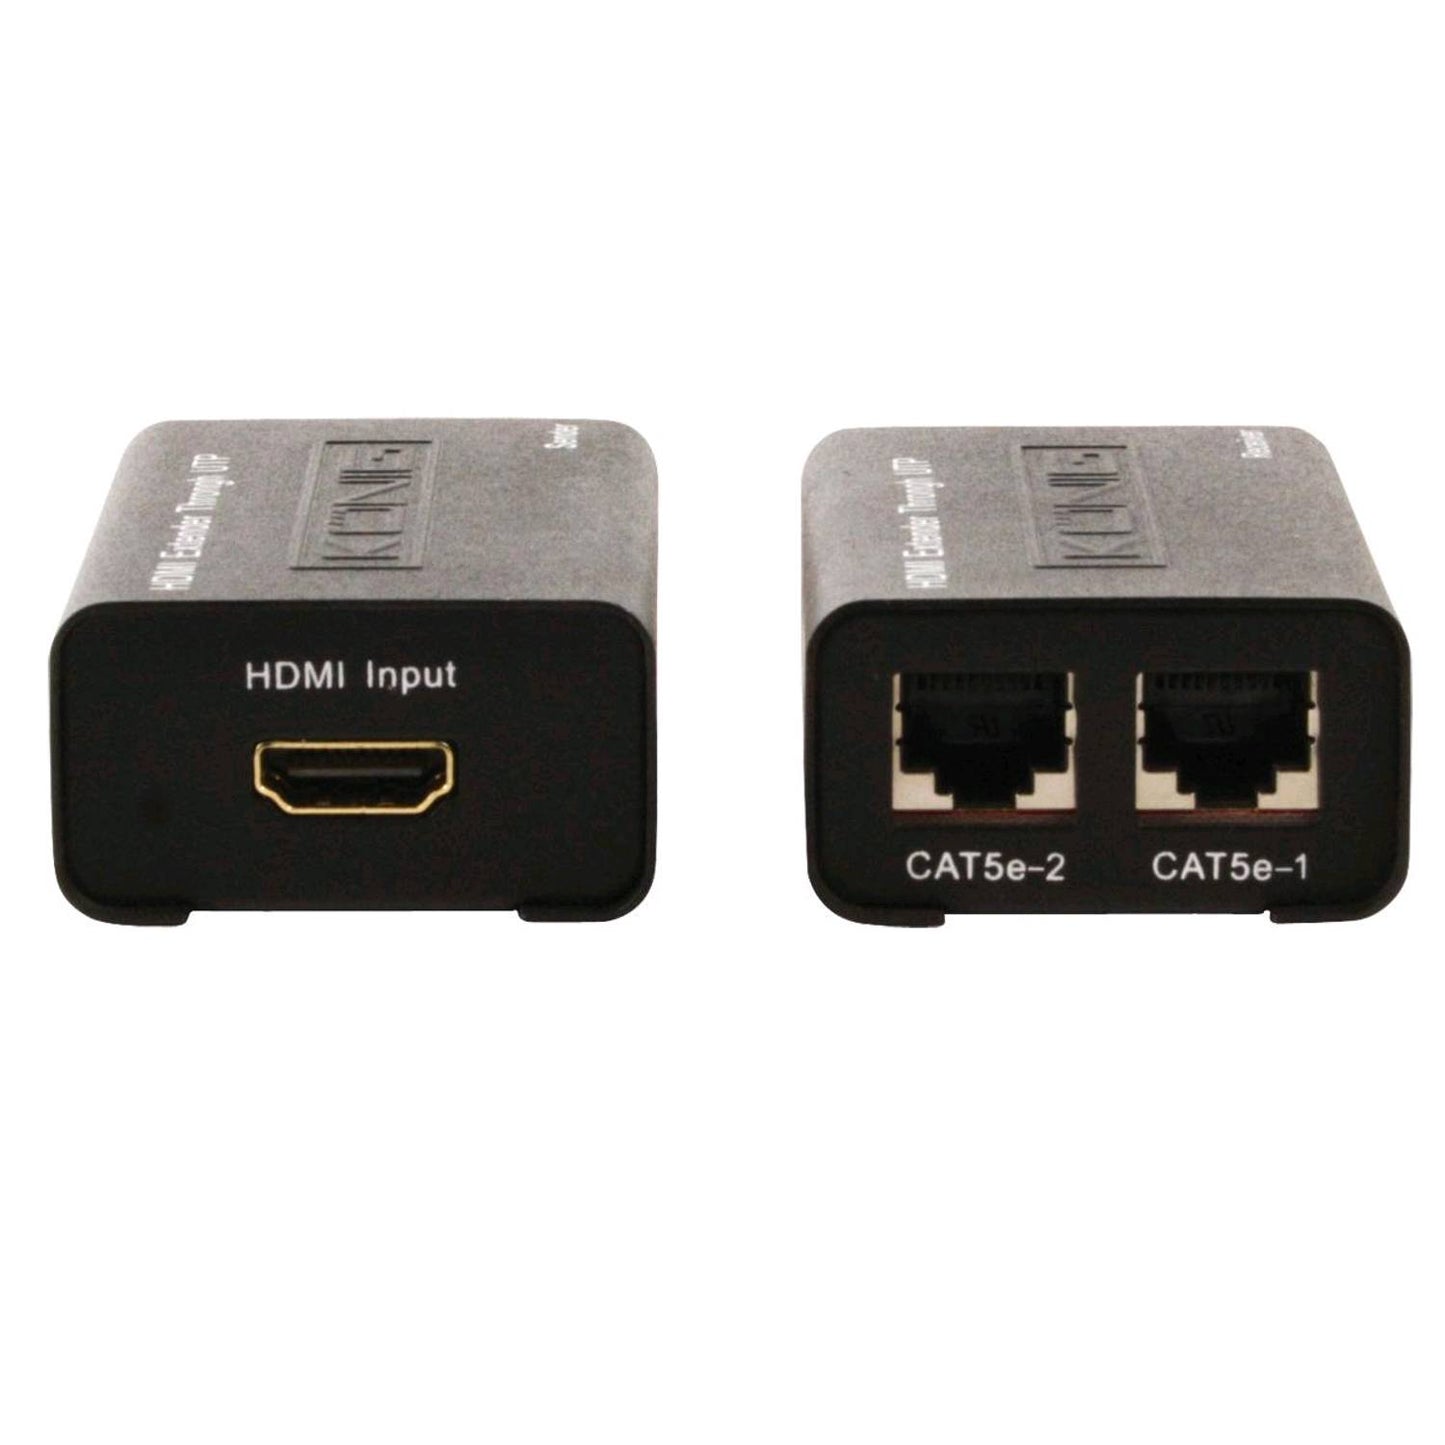 HDMI FullHd Übertragung über CAT5e / Cat 6 bis 60m bei 1080p